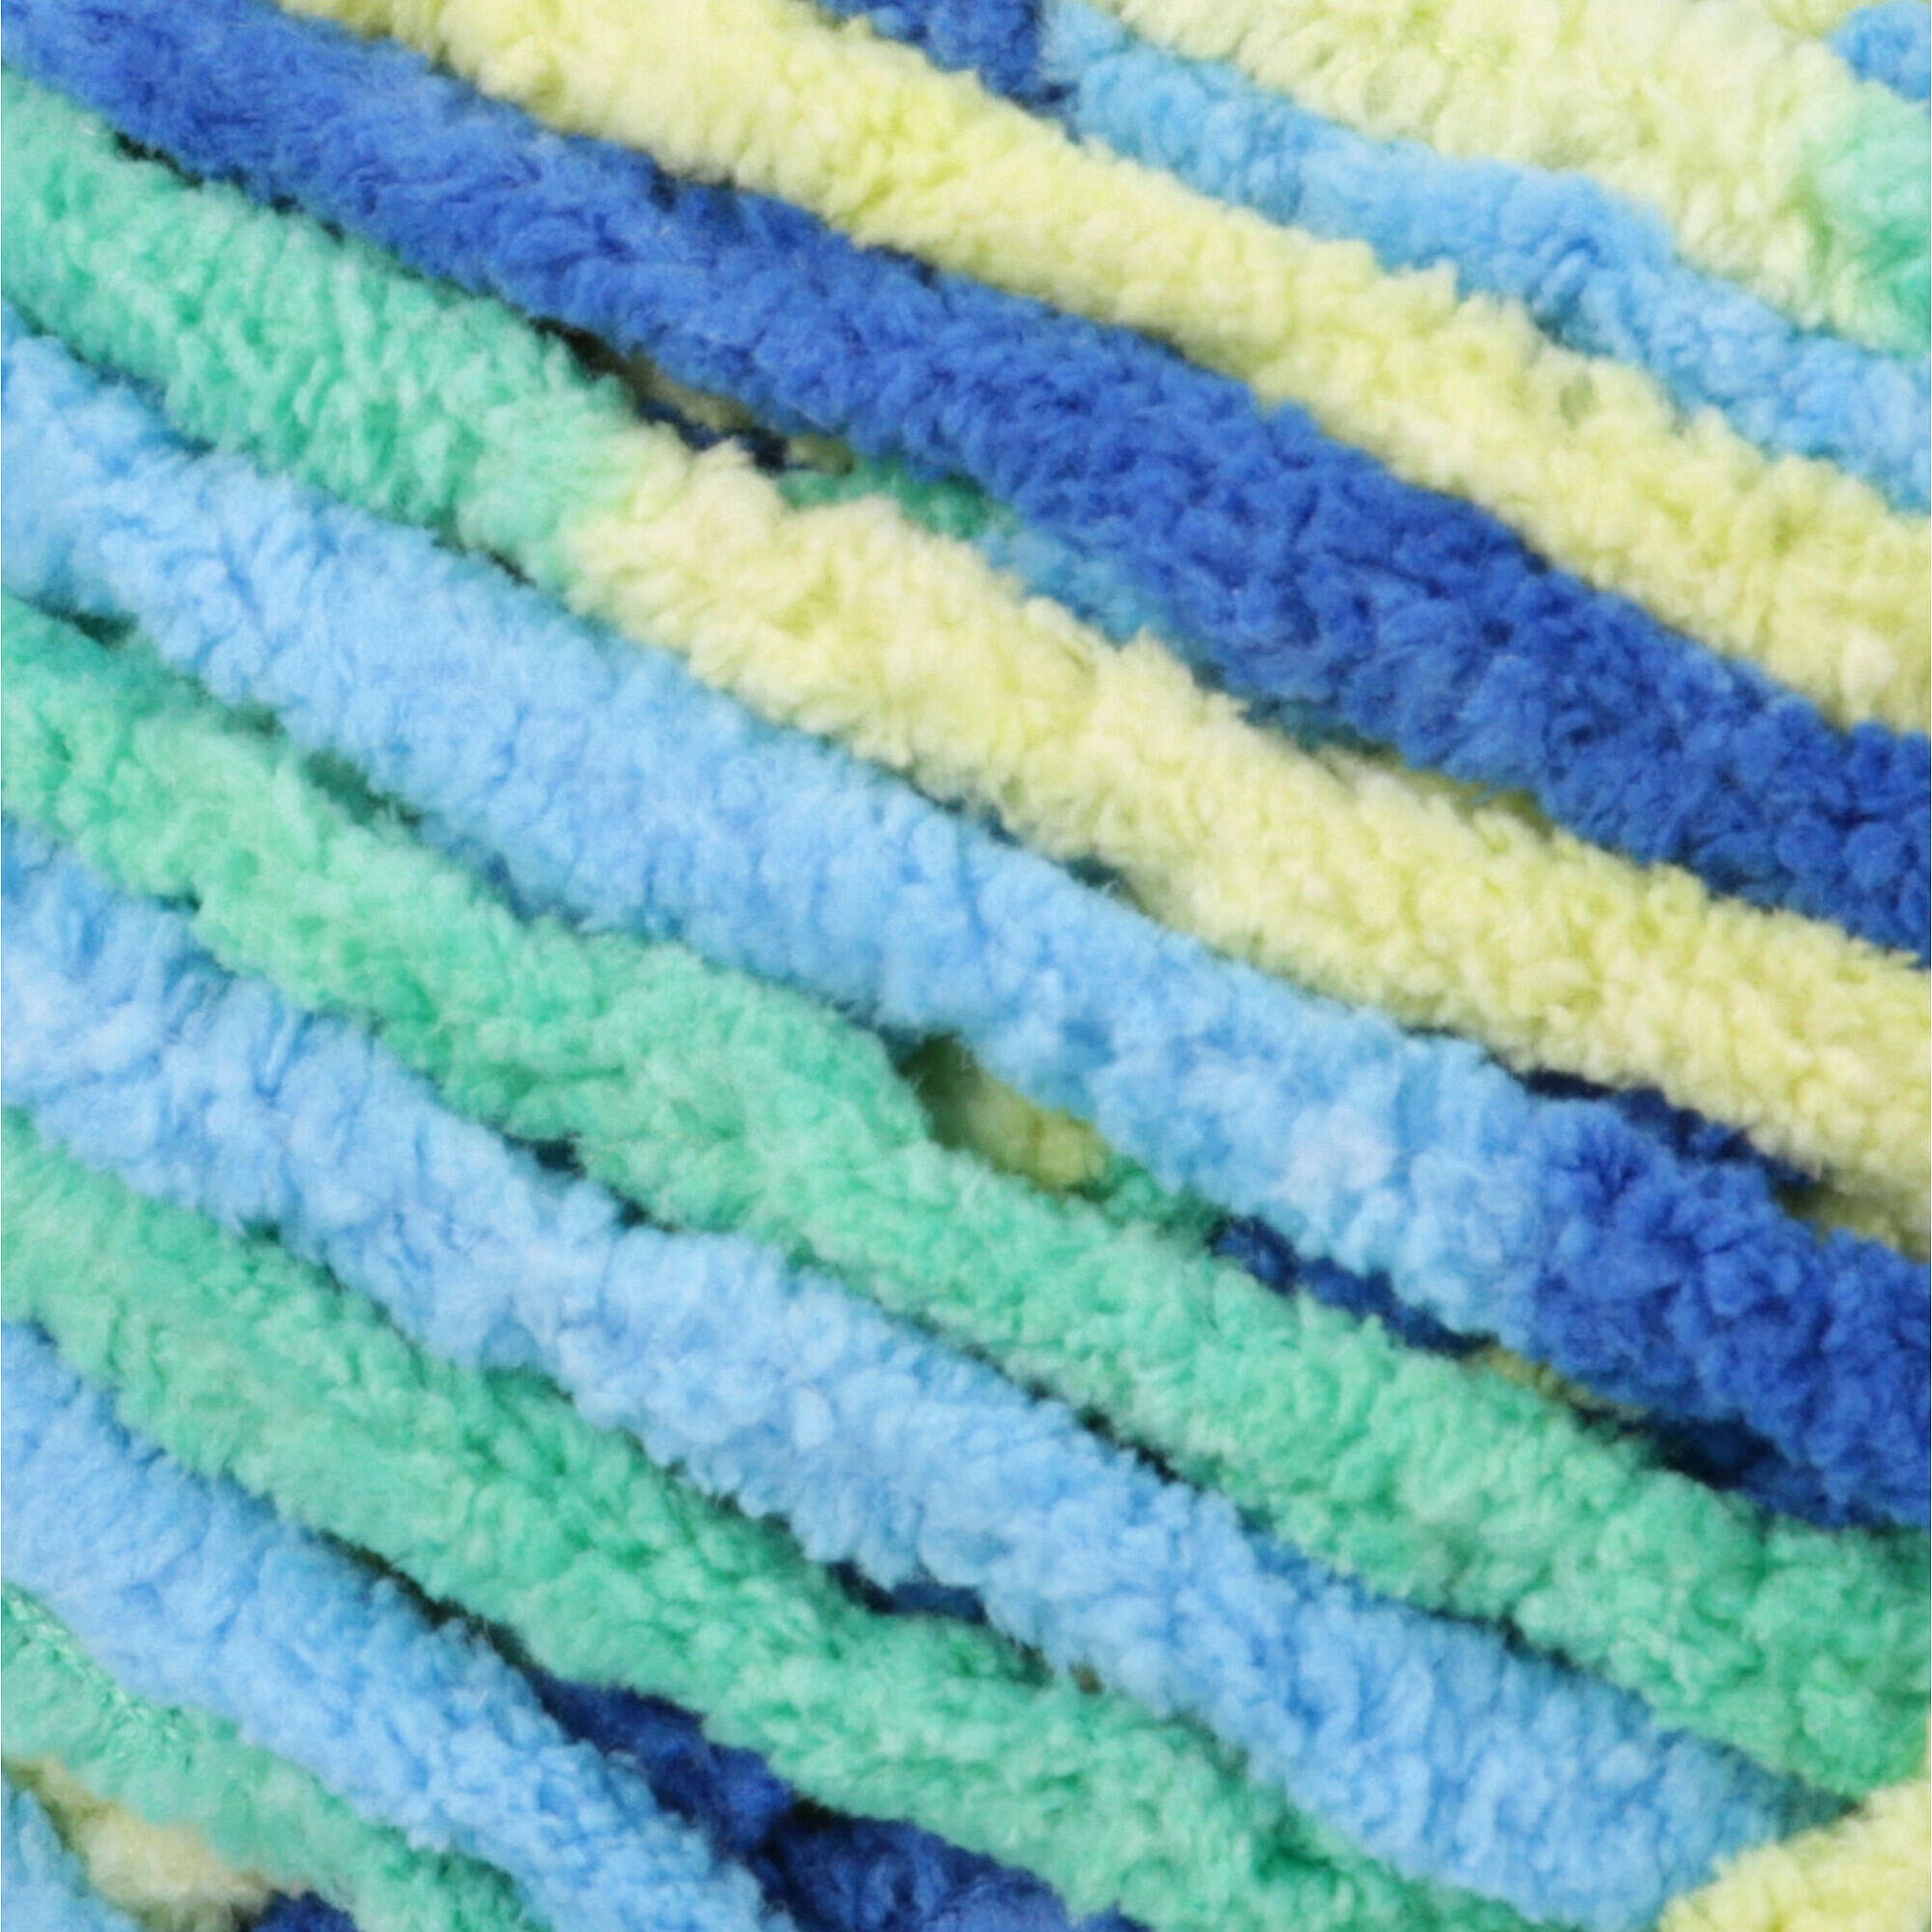 Bernat Blanket Brights Yarn (300g/10.5oz) - Discontinued Shades